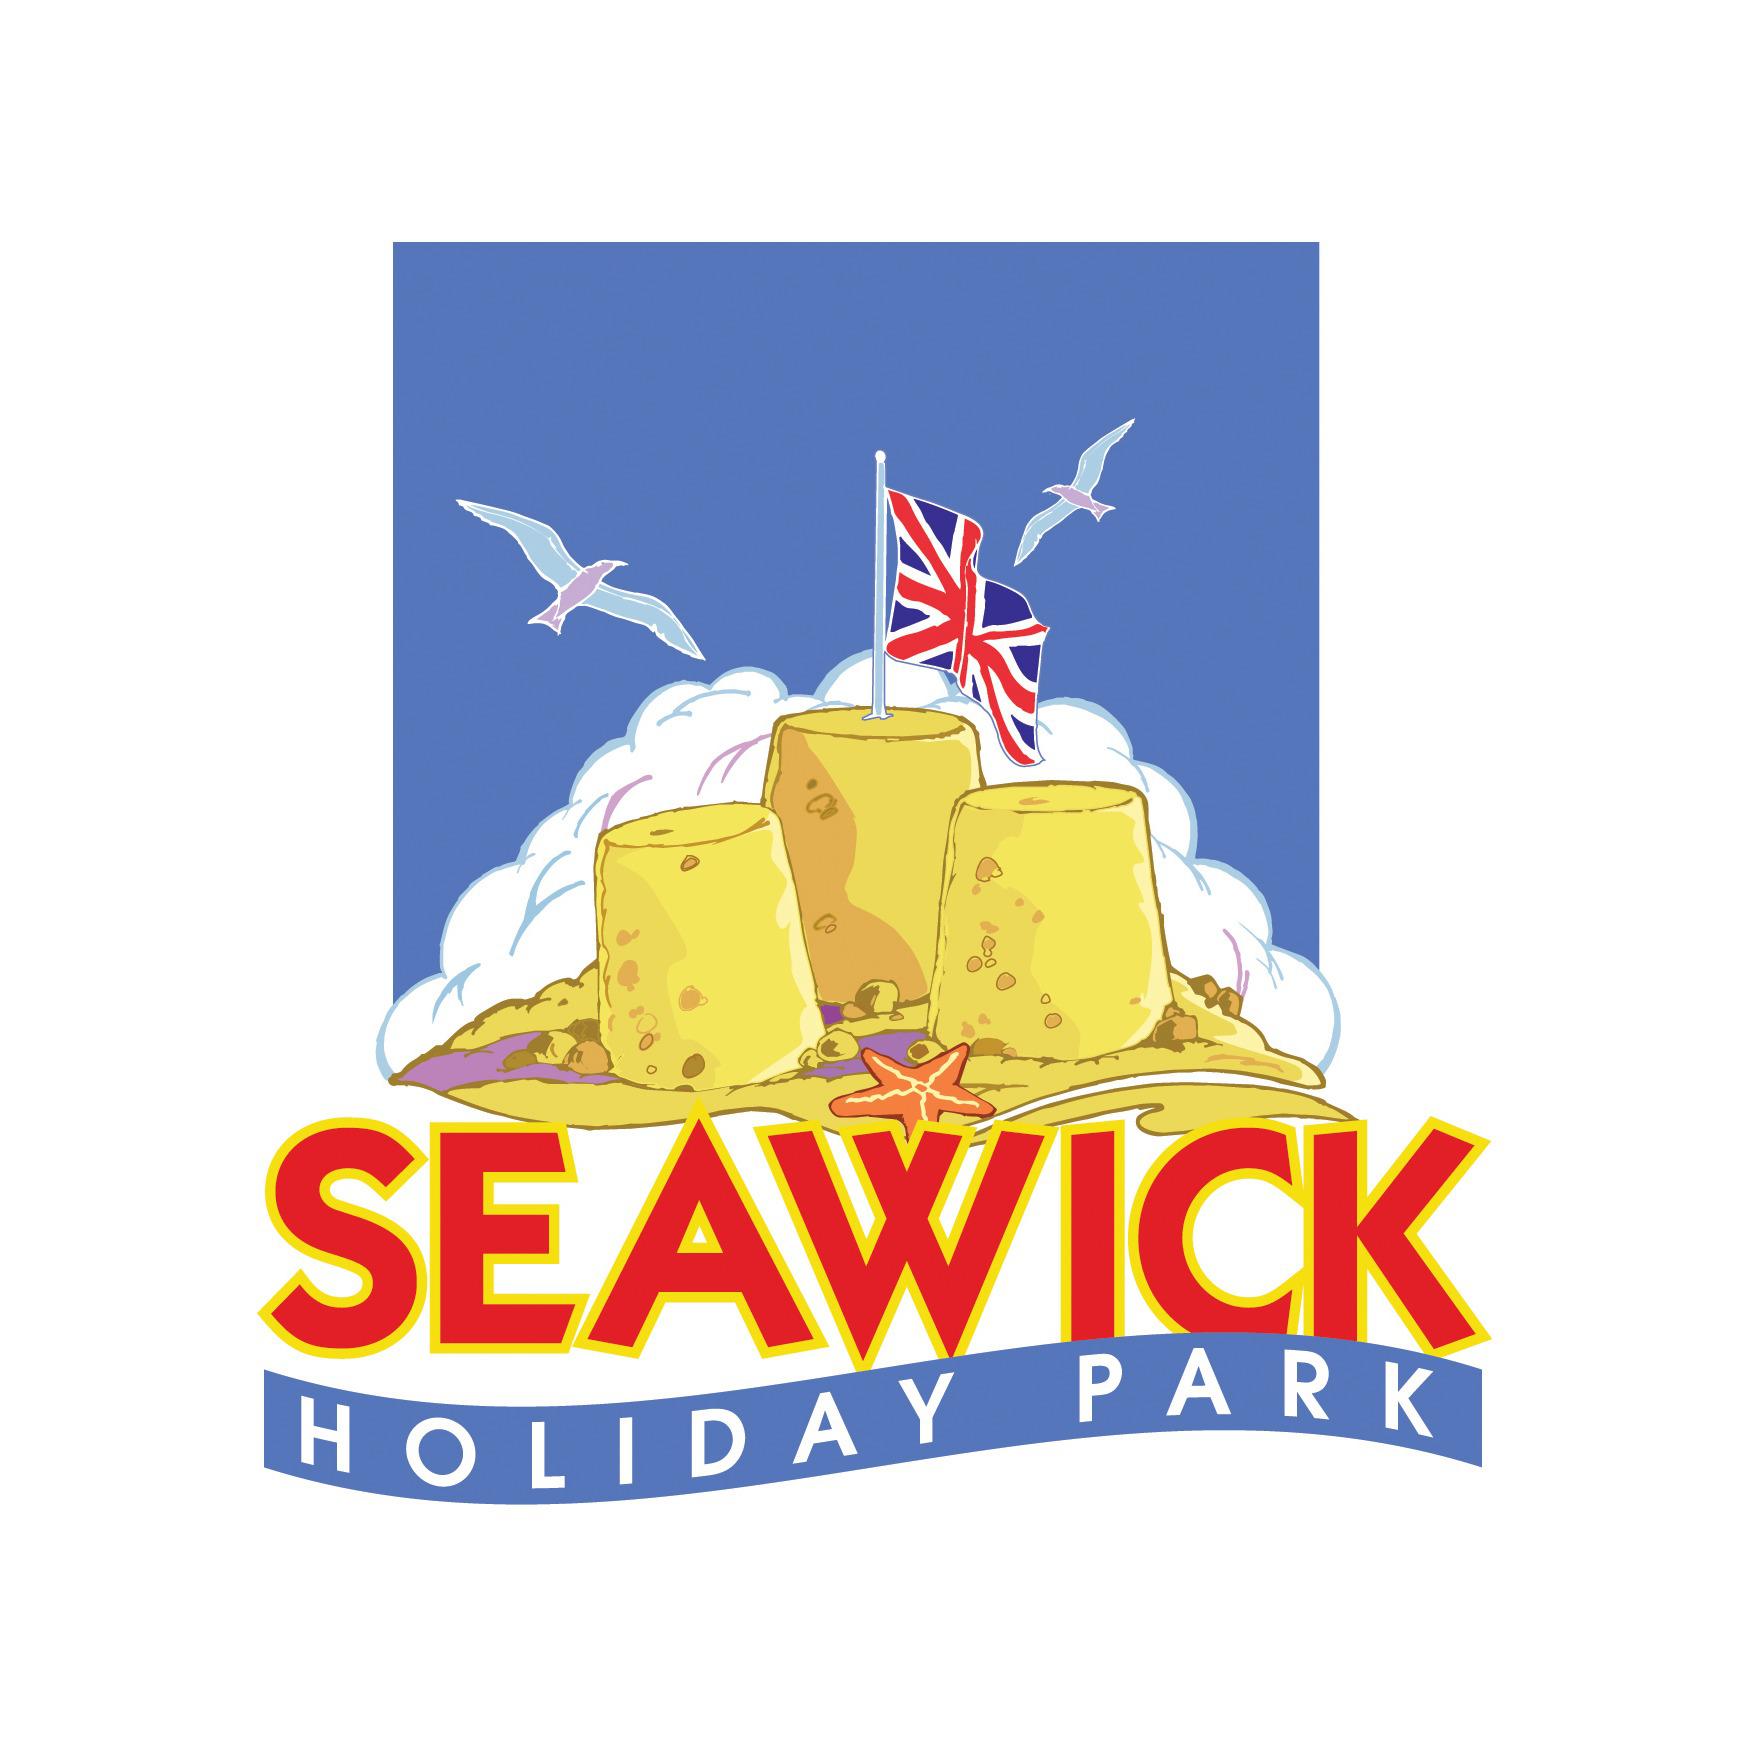 Seawick Holiday Park Essex 01255 440788